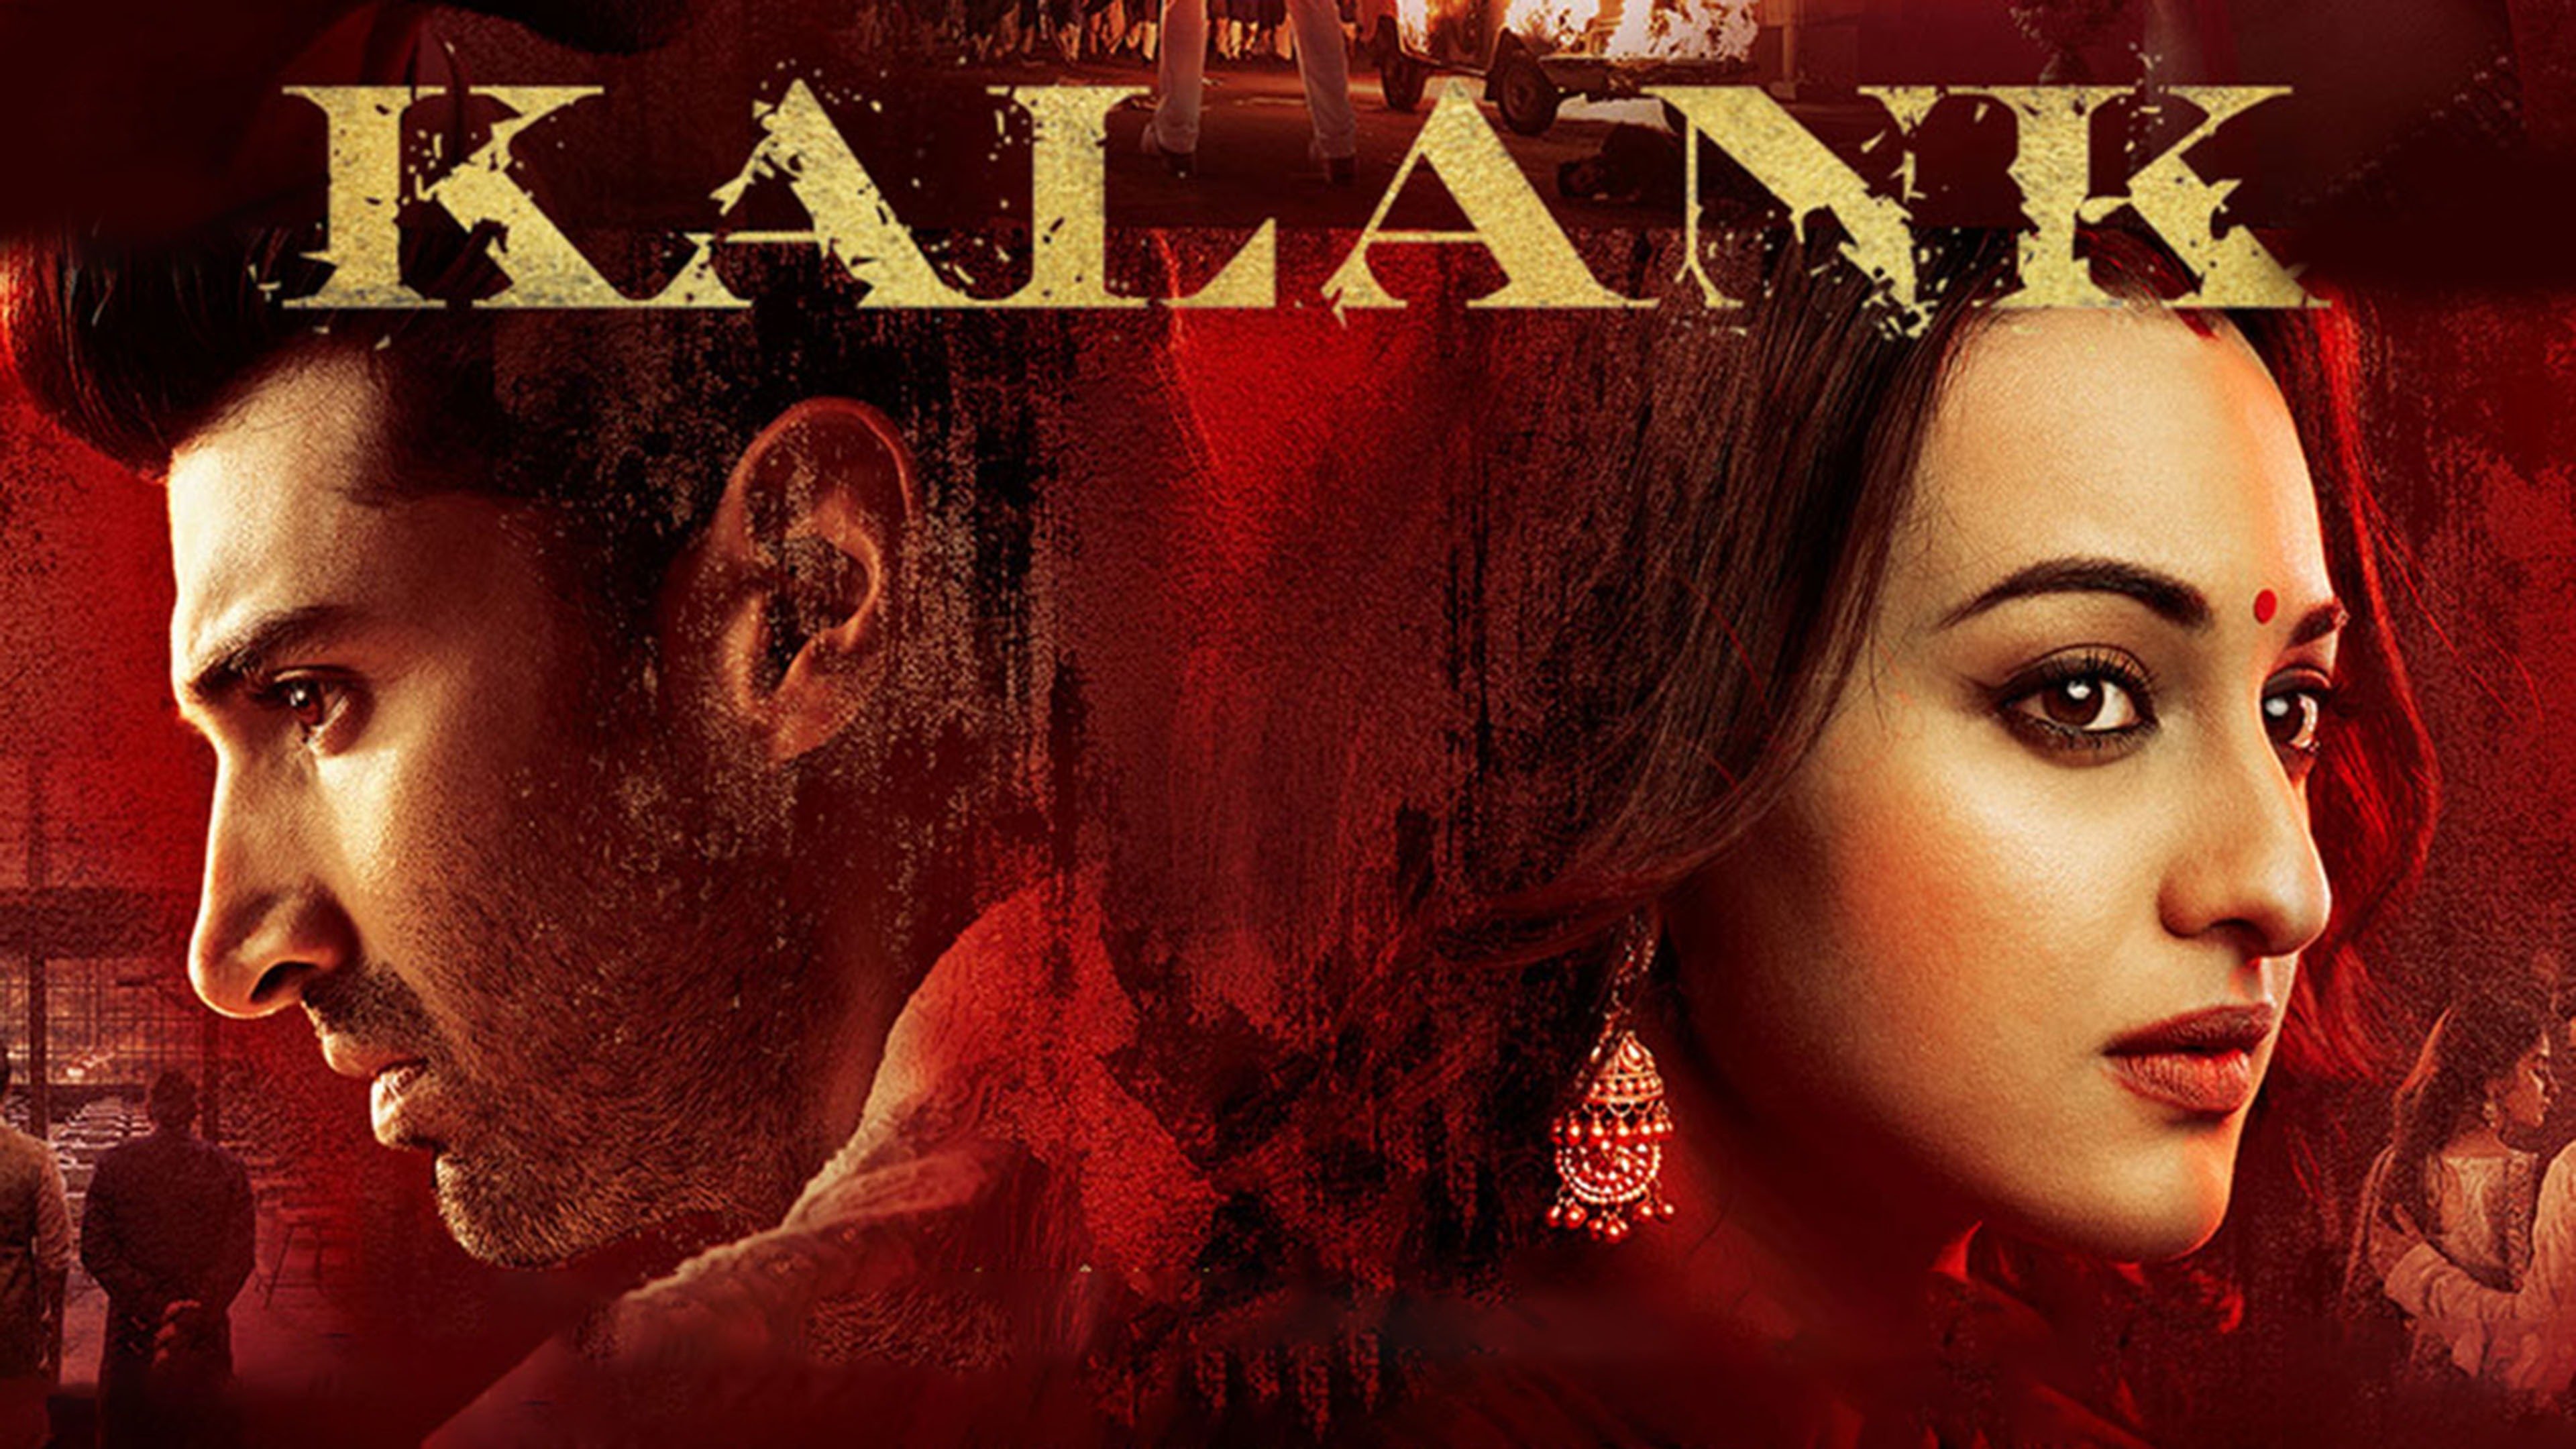 Kalank: Trailer 1 - Trailers & Videos - Rotten Tomatoes